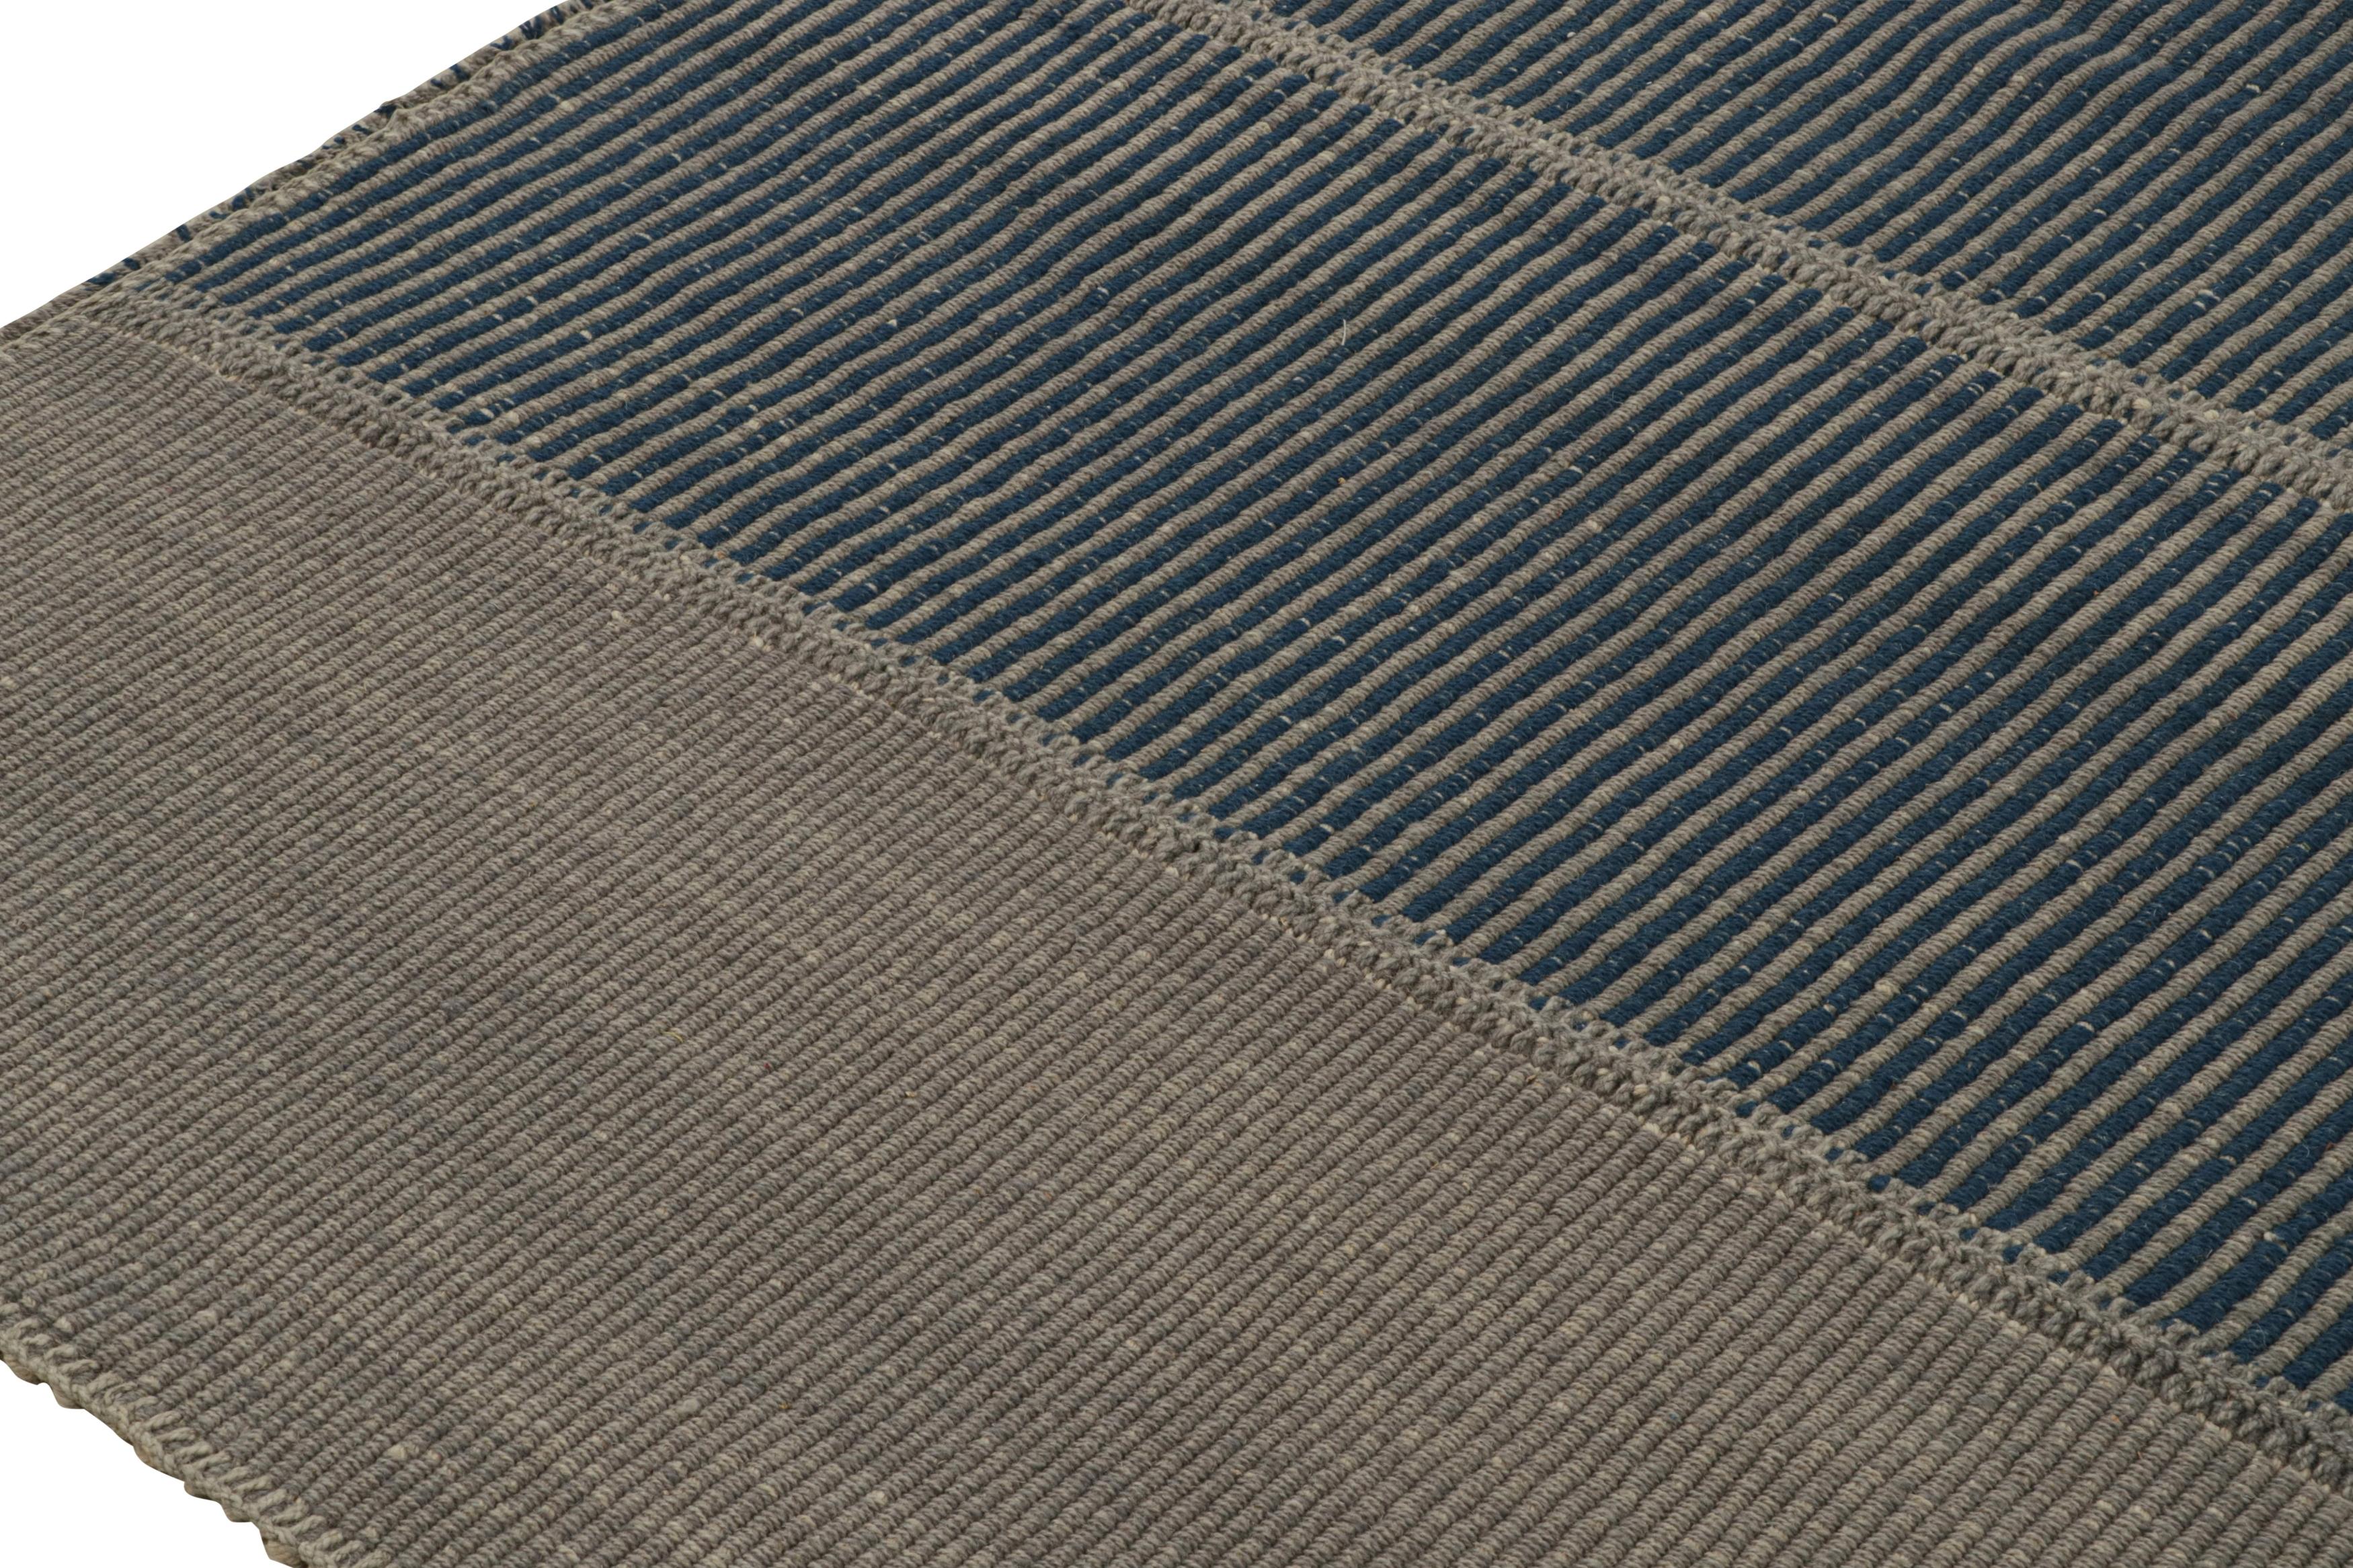 Rug & Kilim's Contemporary Kilim in Grau und Blau Textural Stripes  (Handgewebt) im Angebot